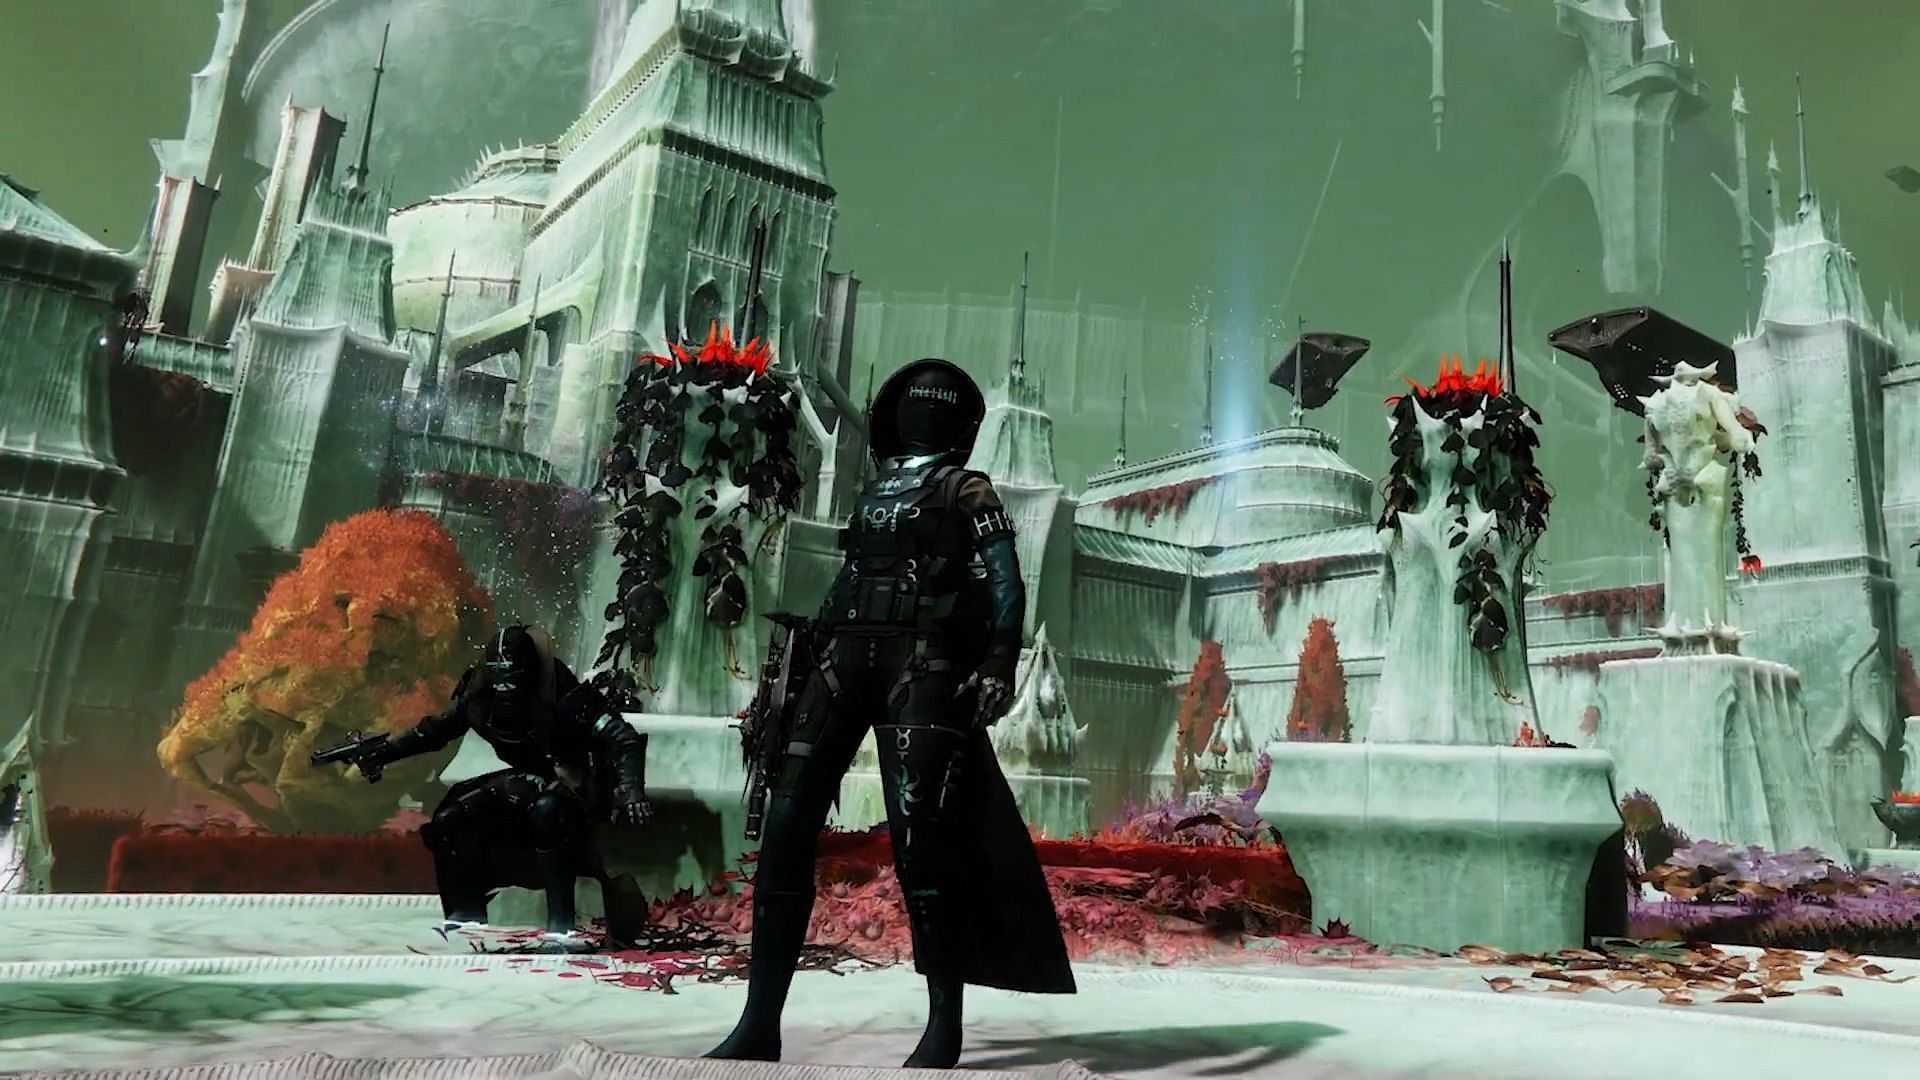 Destiny 2 The Witch Queen Throneworld of Savathun (Image via Bungie)